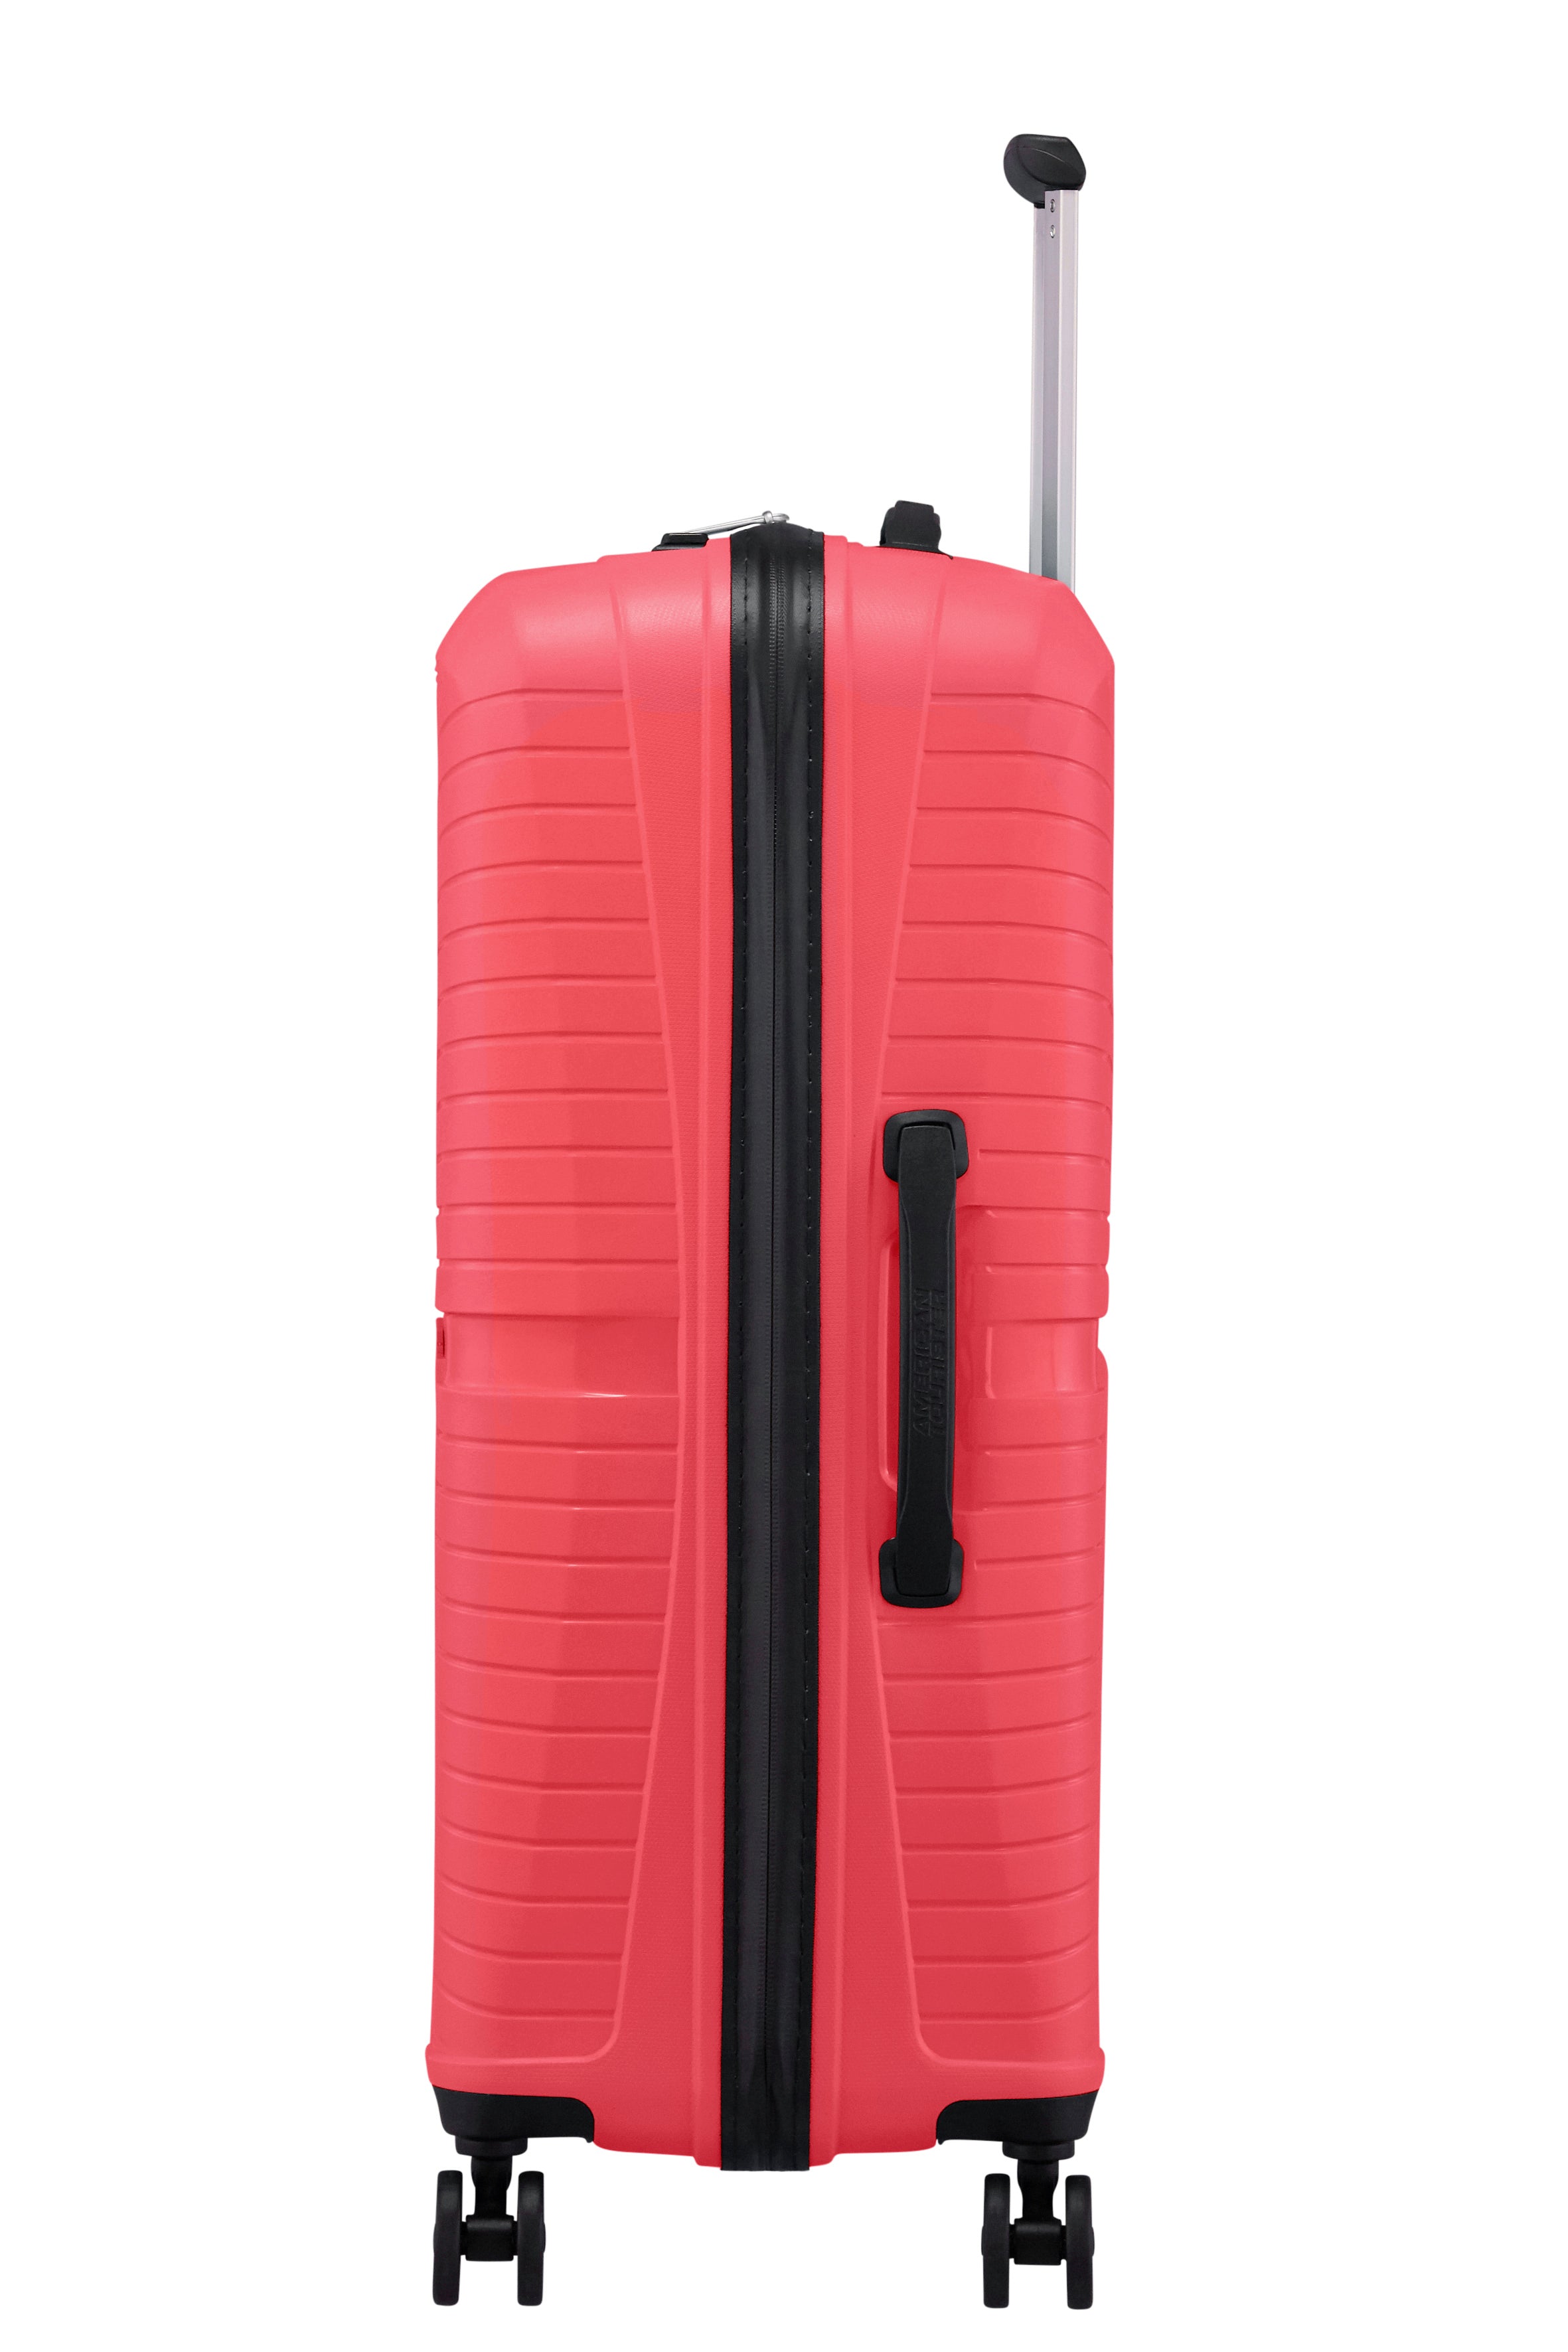 American Tourister - Airconic 67cm Medium 4 Wheel Hard Suitcase - Paradise Pink-2